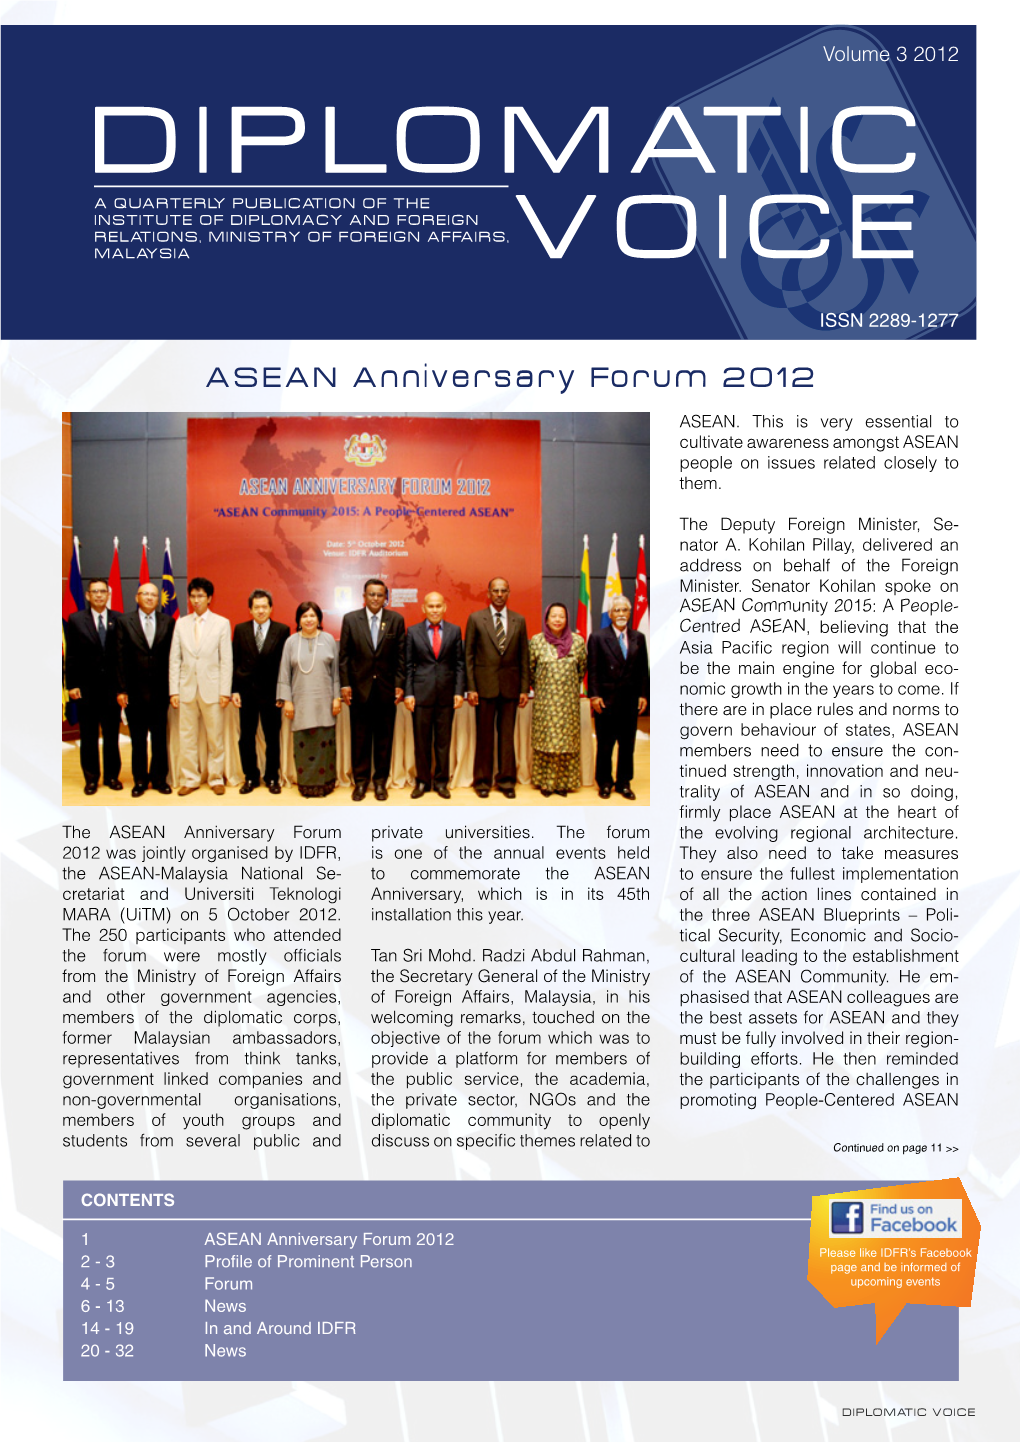 ASEAN Anniversary Forum 2012